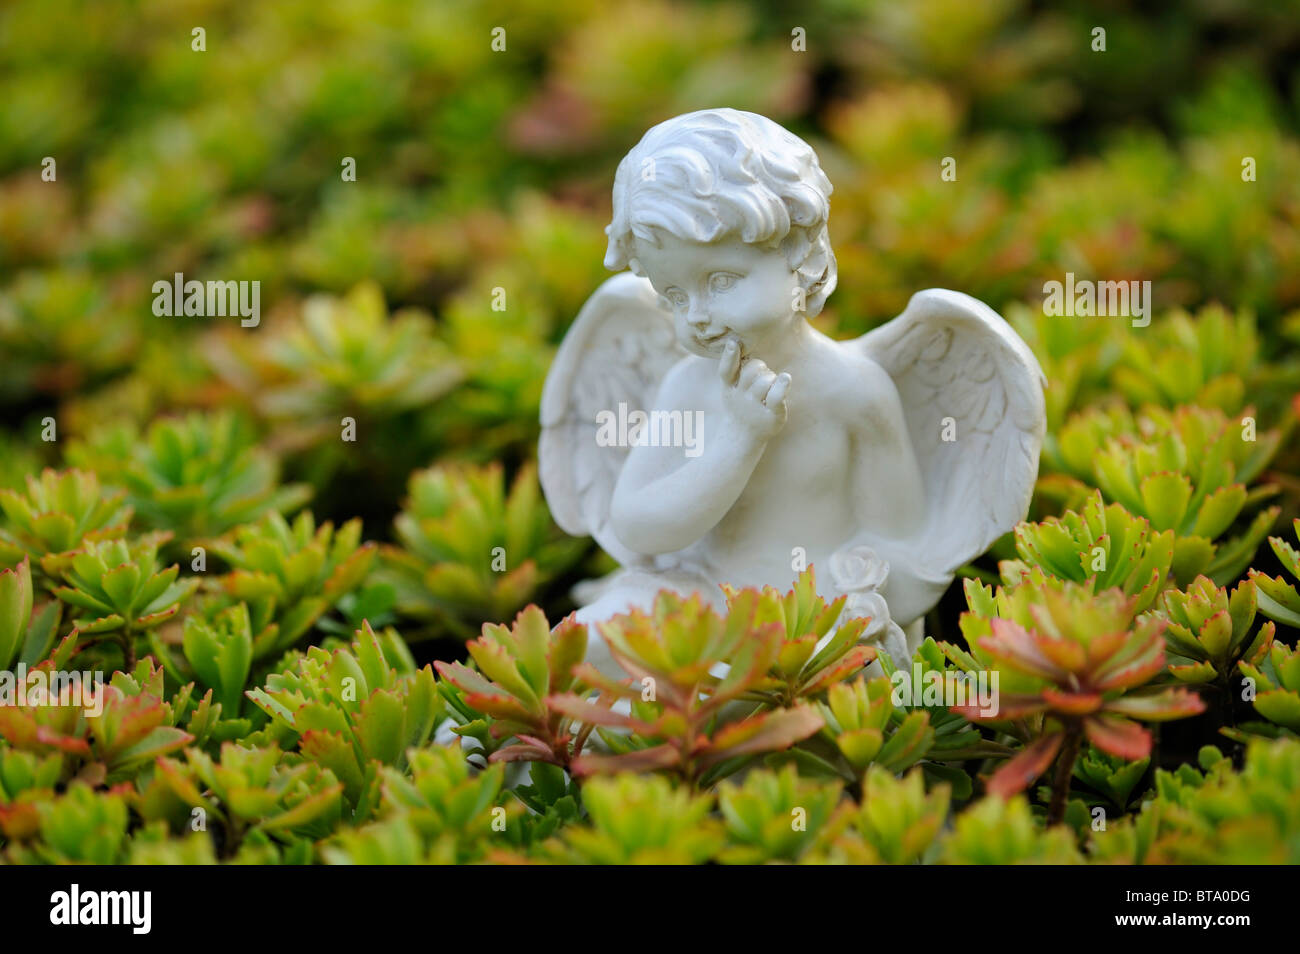 Angel figure as a garden decoration between rockery plants Stock Photo